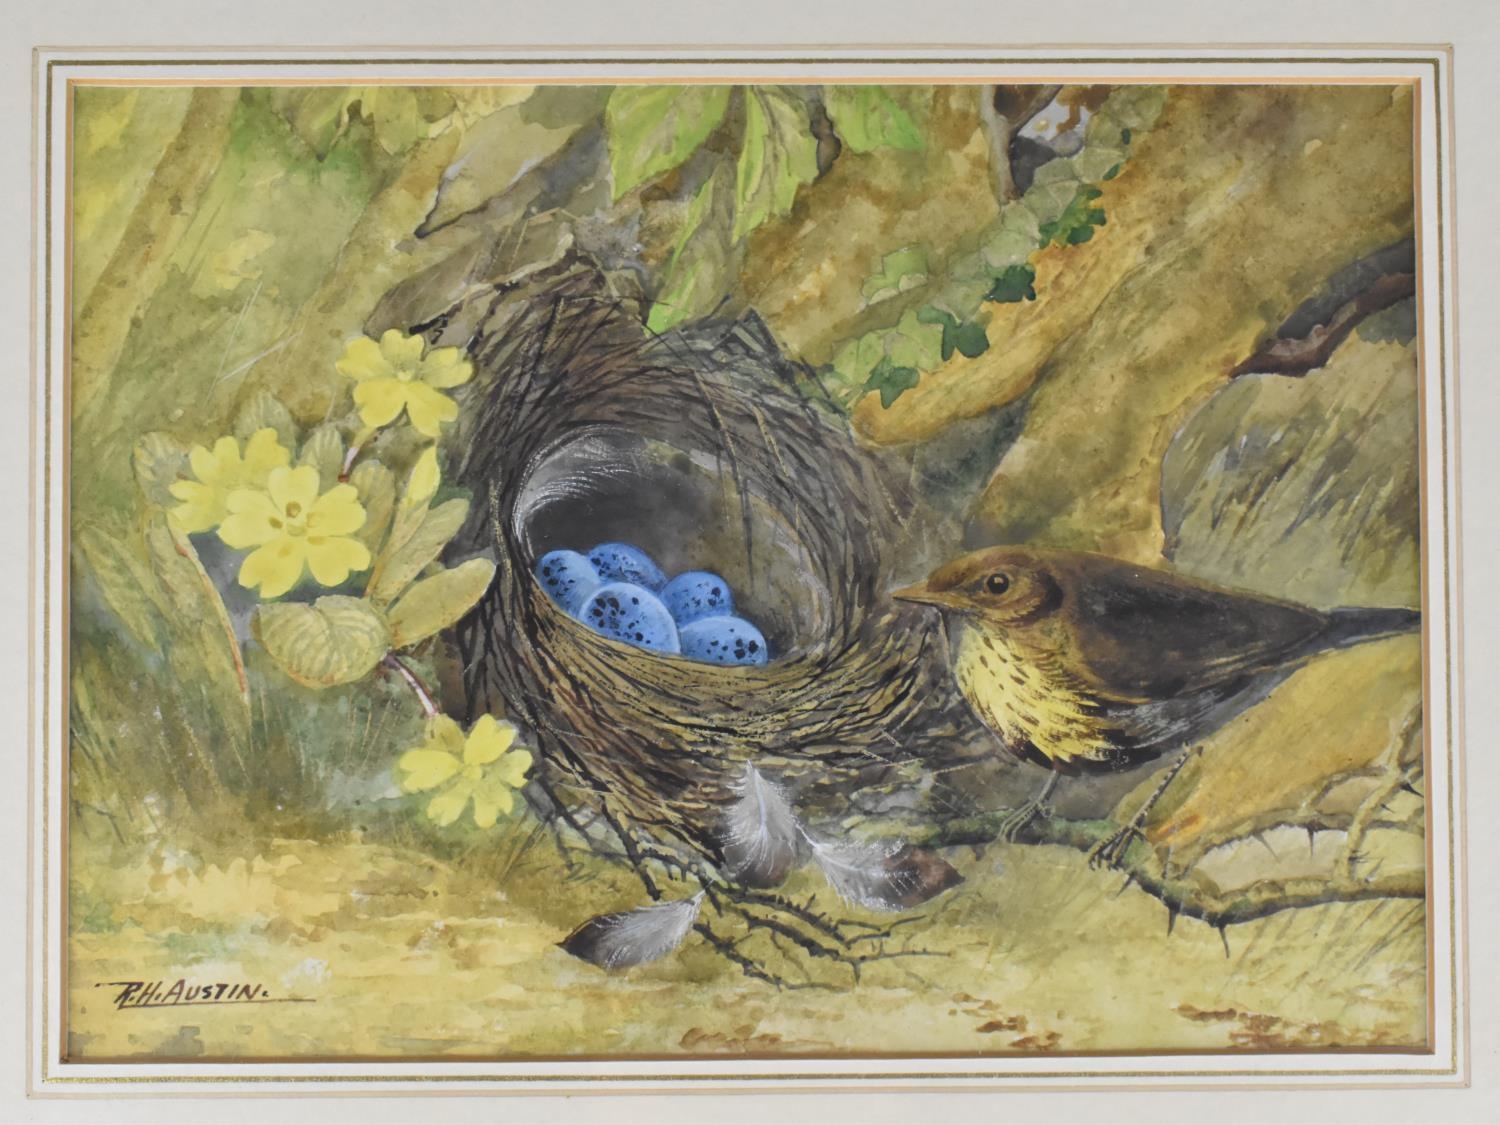 R H Austin, Watercolour, Still Life Study of Thrush Beside Nest with Eggs, Subject 22x16cm, Framed - Image 2 of 2